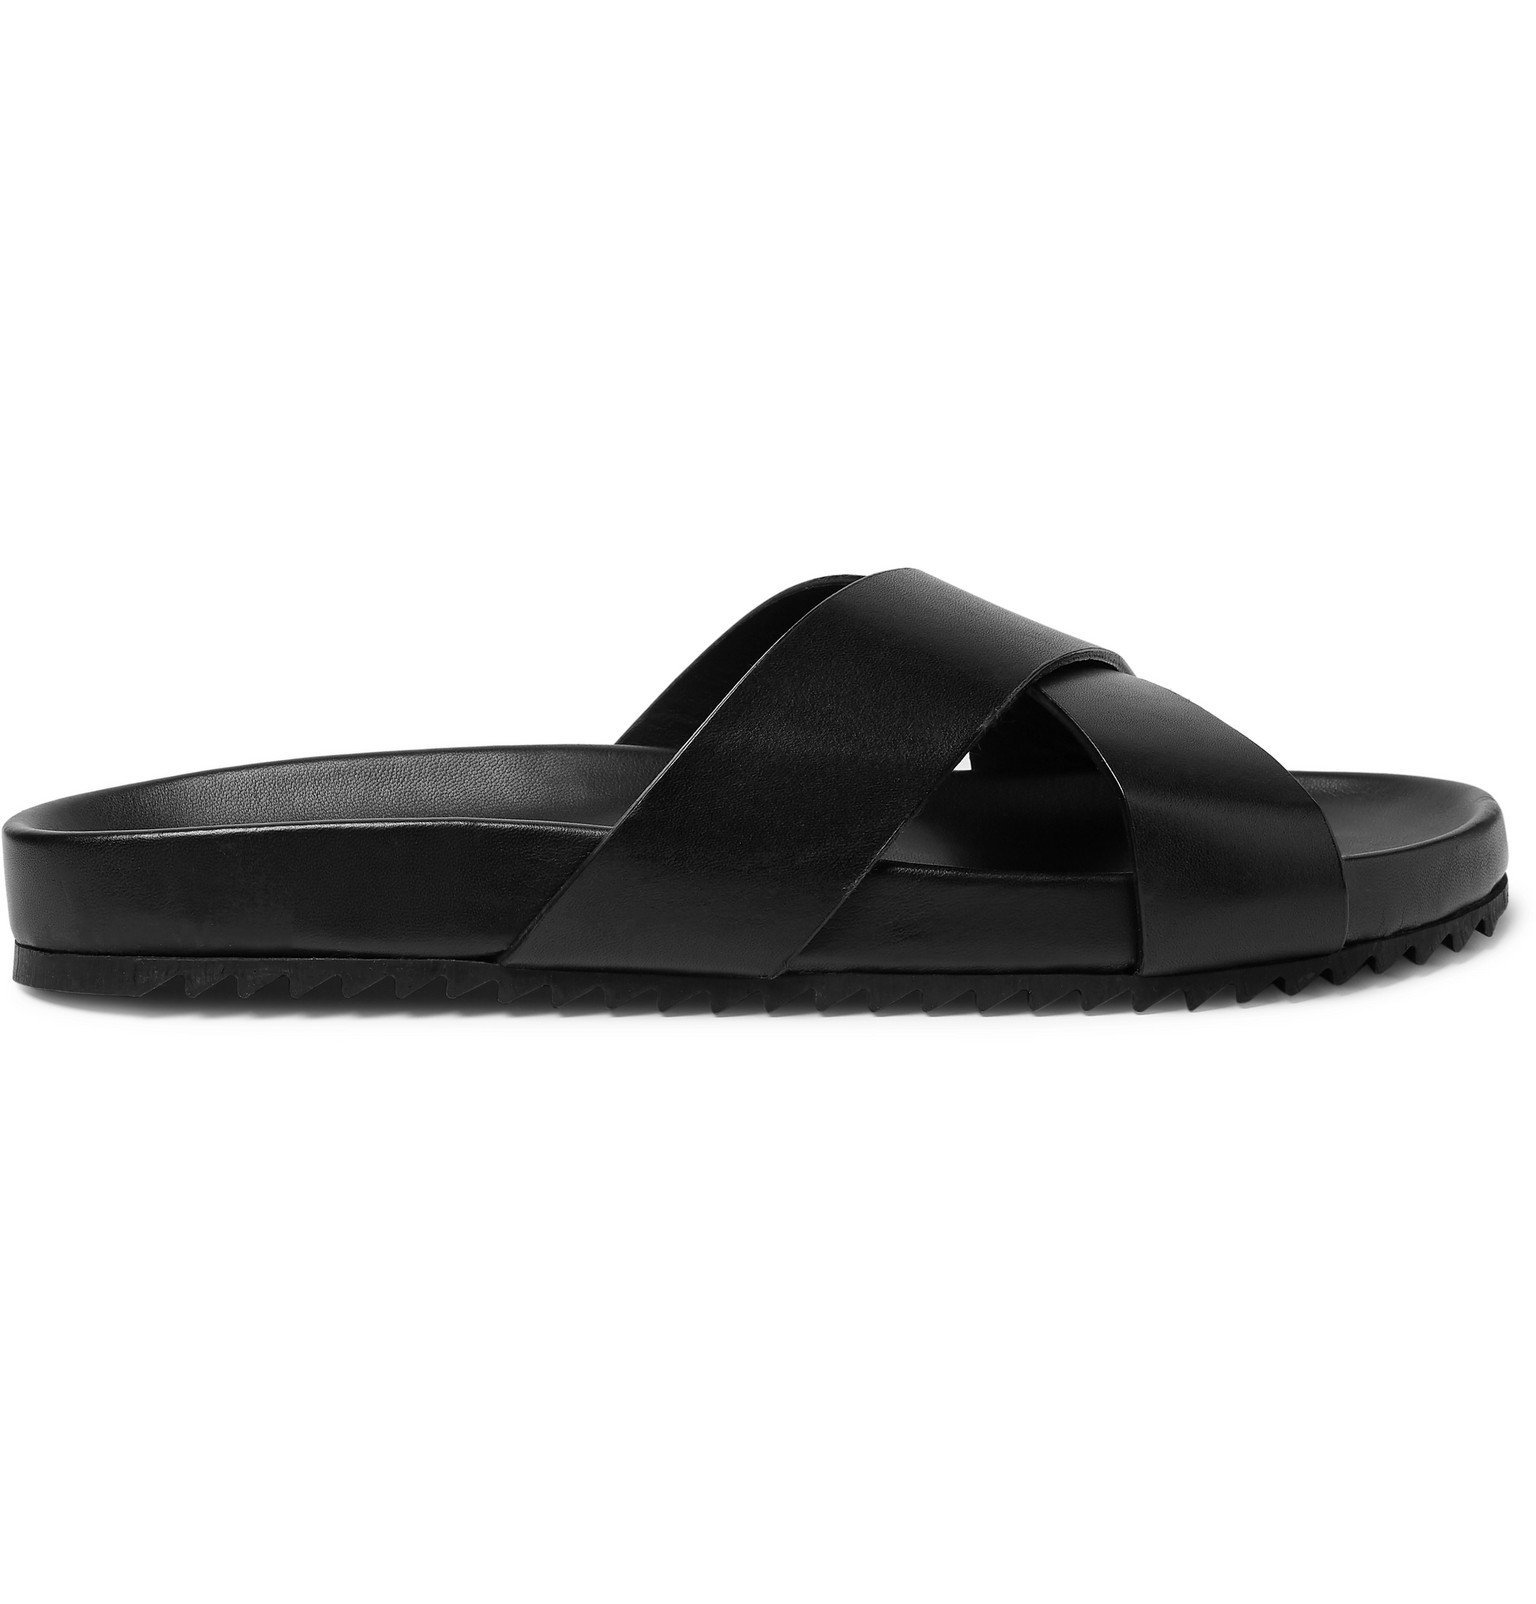 Grenson - Leather Sandals - Black Grenson